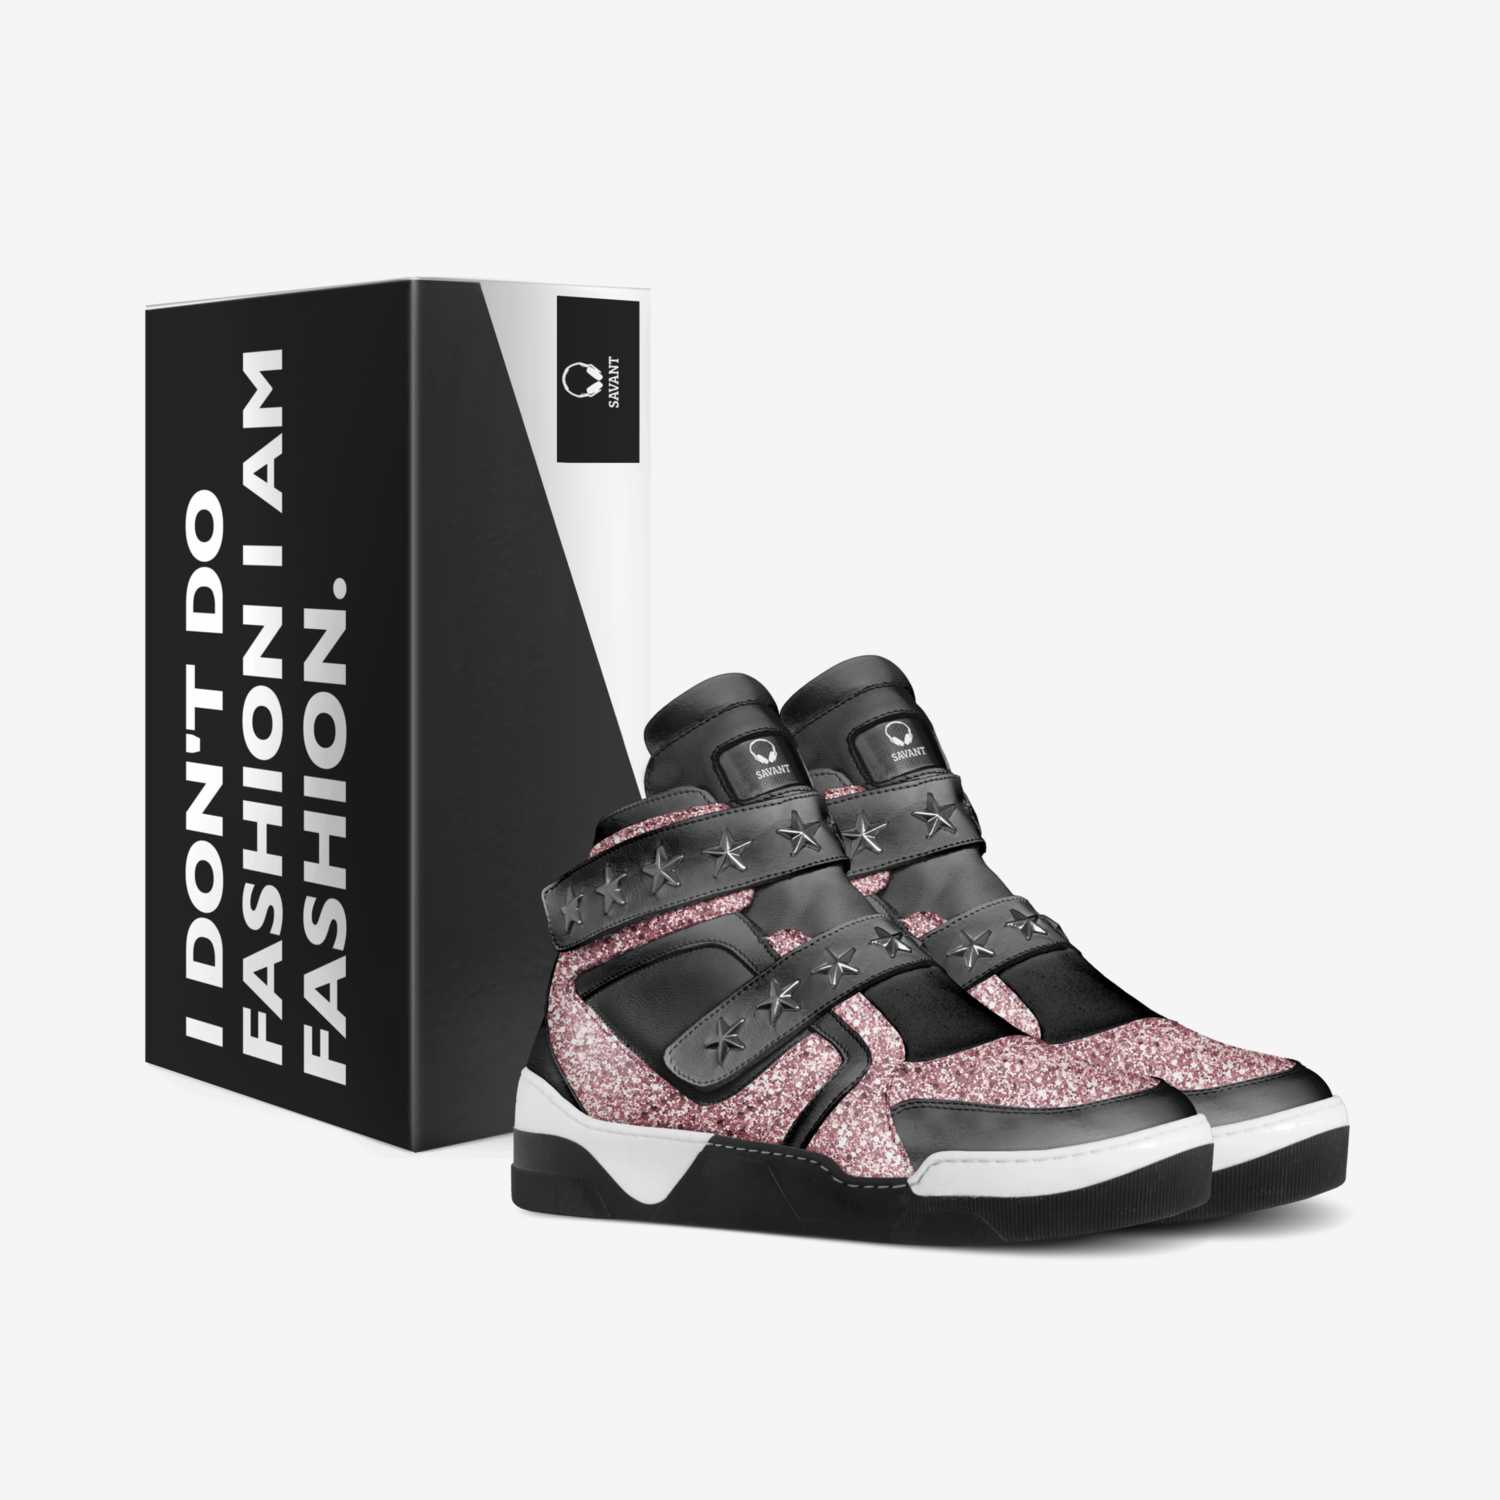 Solis custom made in Italy shoes by Thaddaeus Jon | Box view